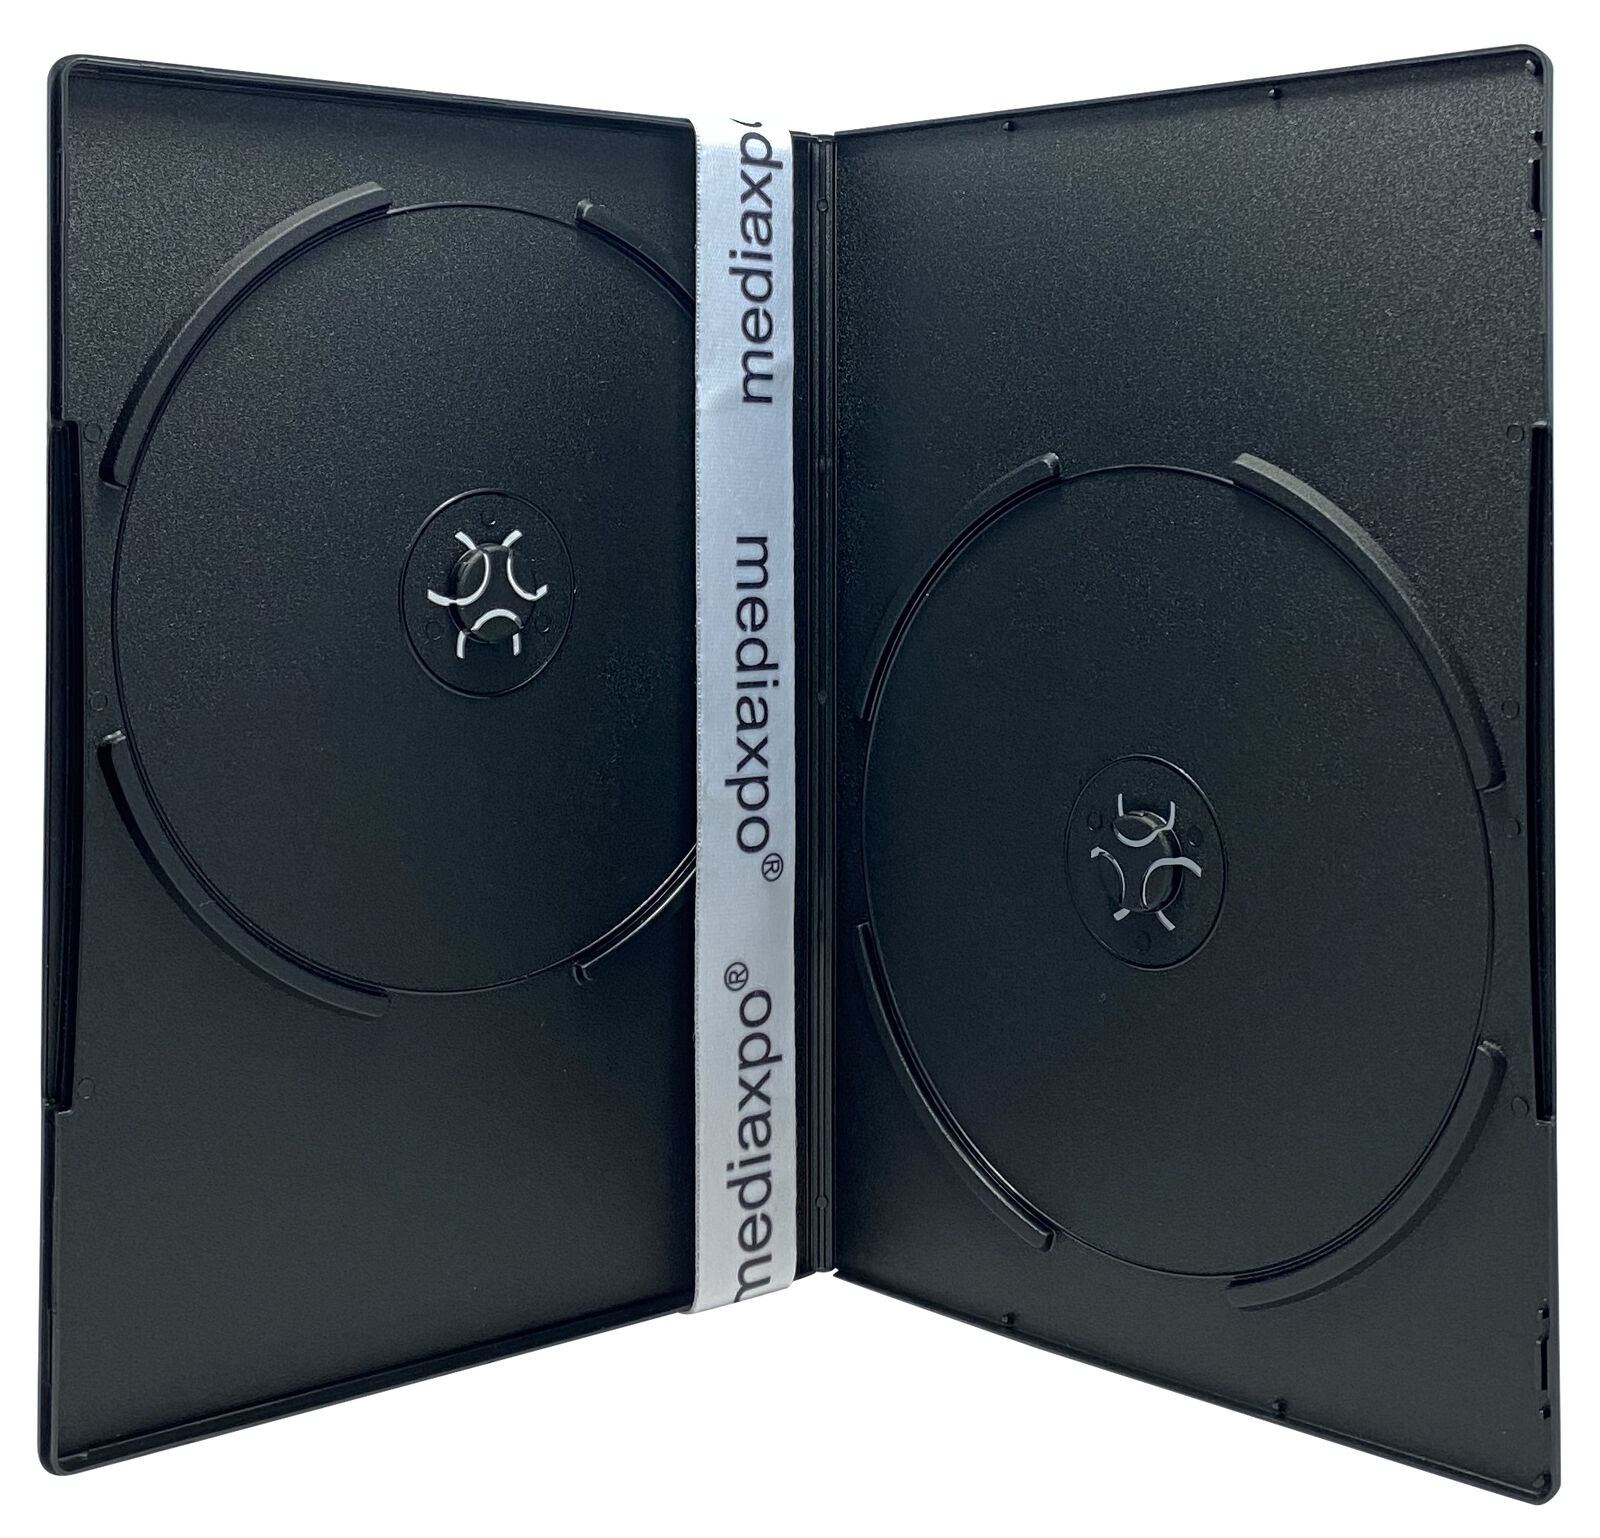 PREMIUM SLIM Black Double DVD Cases 7MM (100% New Material) Lot